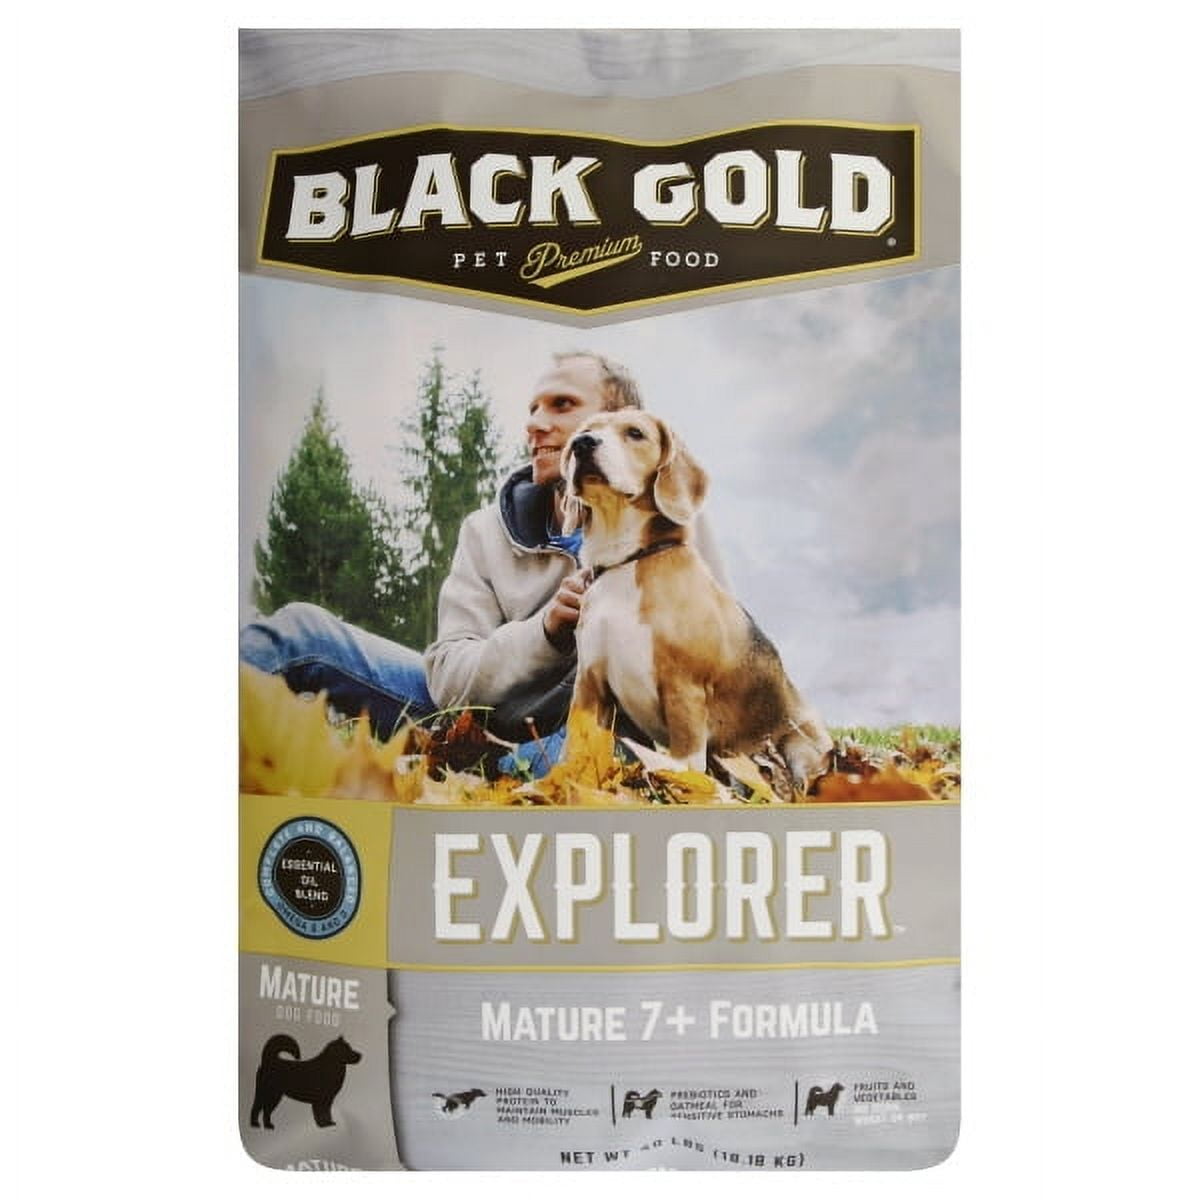 Black Gold Explorer Dog Food, Puppy Formula - 40 lb